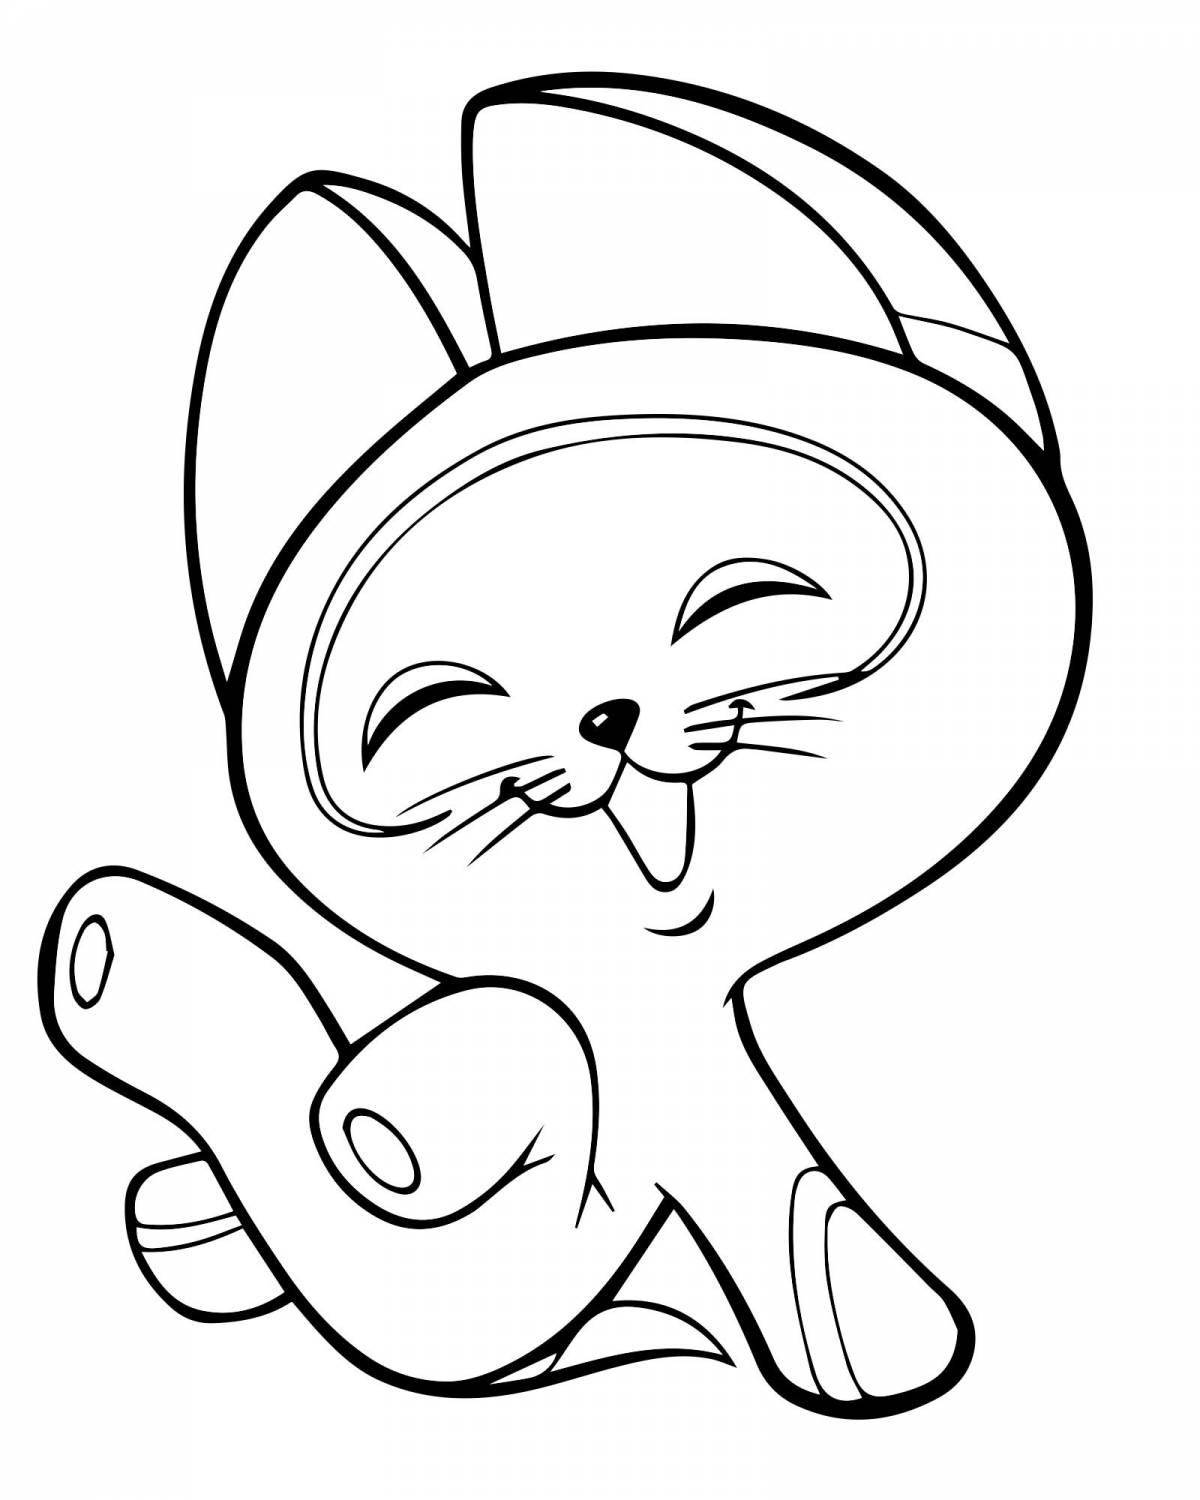 Magic kitten woof coloring for kids